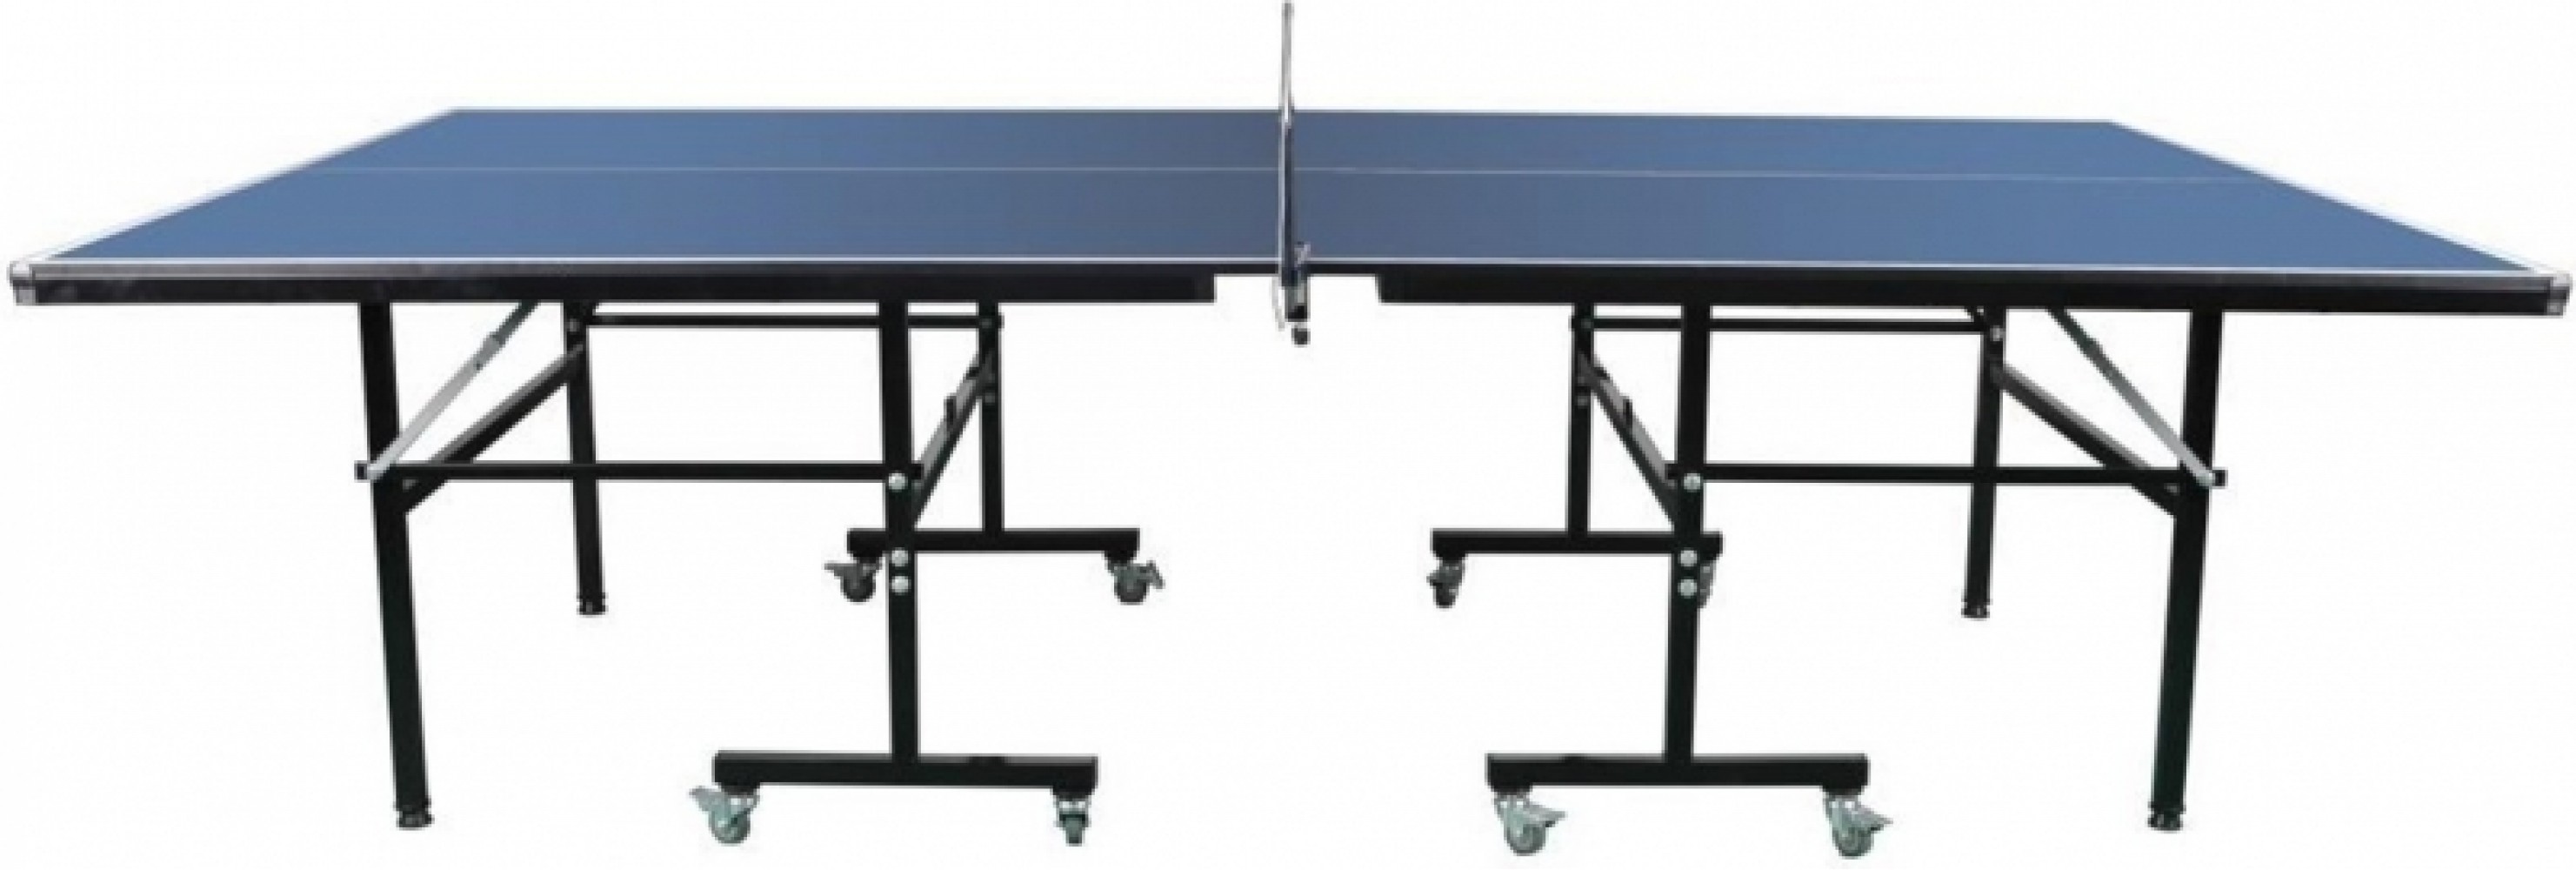 Стандарты стола для пинг понга